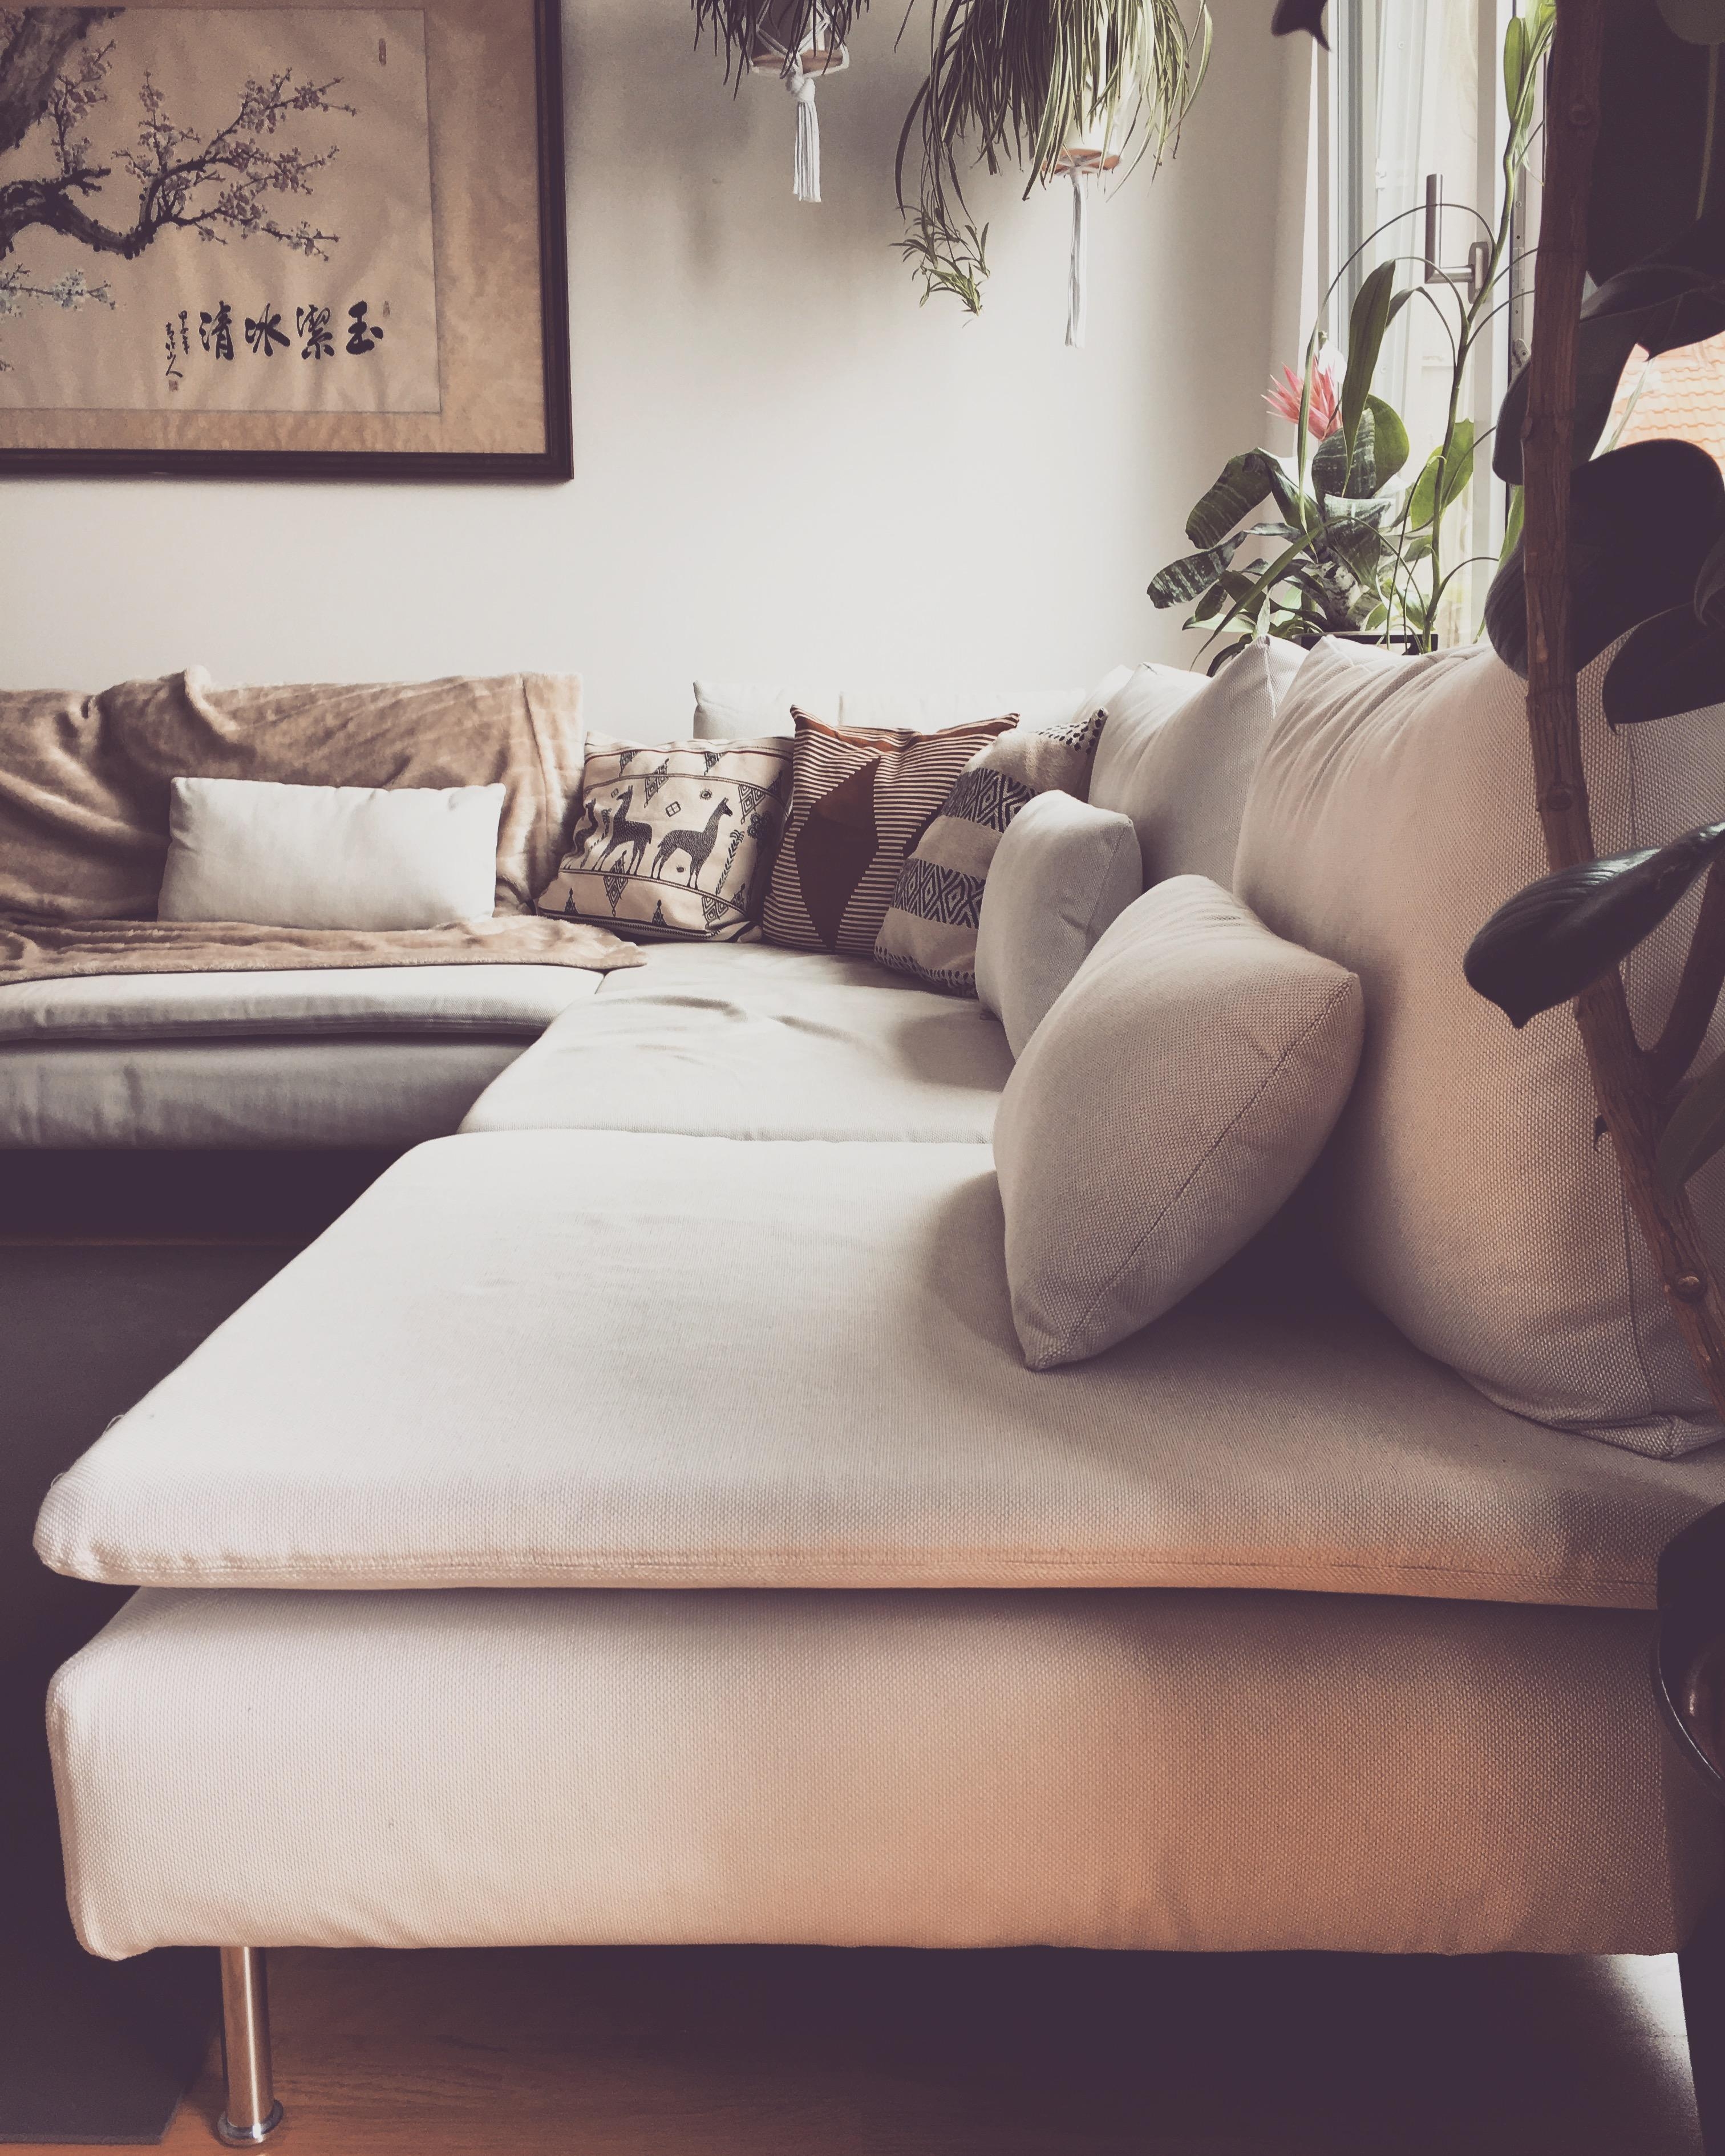 Definitiv meine Lieblingsecke #scandinavianstyle #couch #boho #macrame #white #hygge